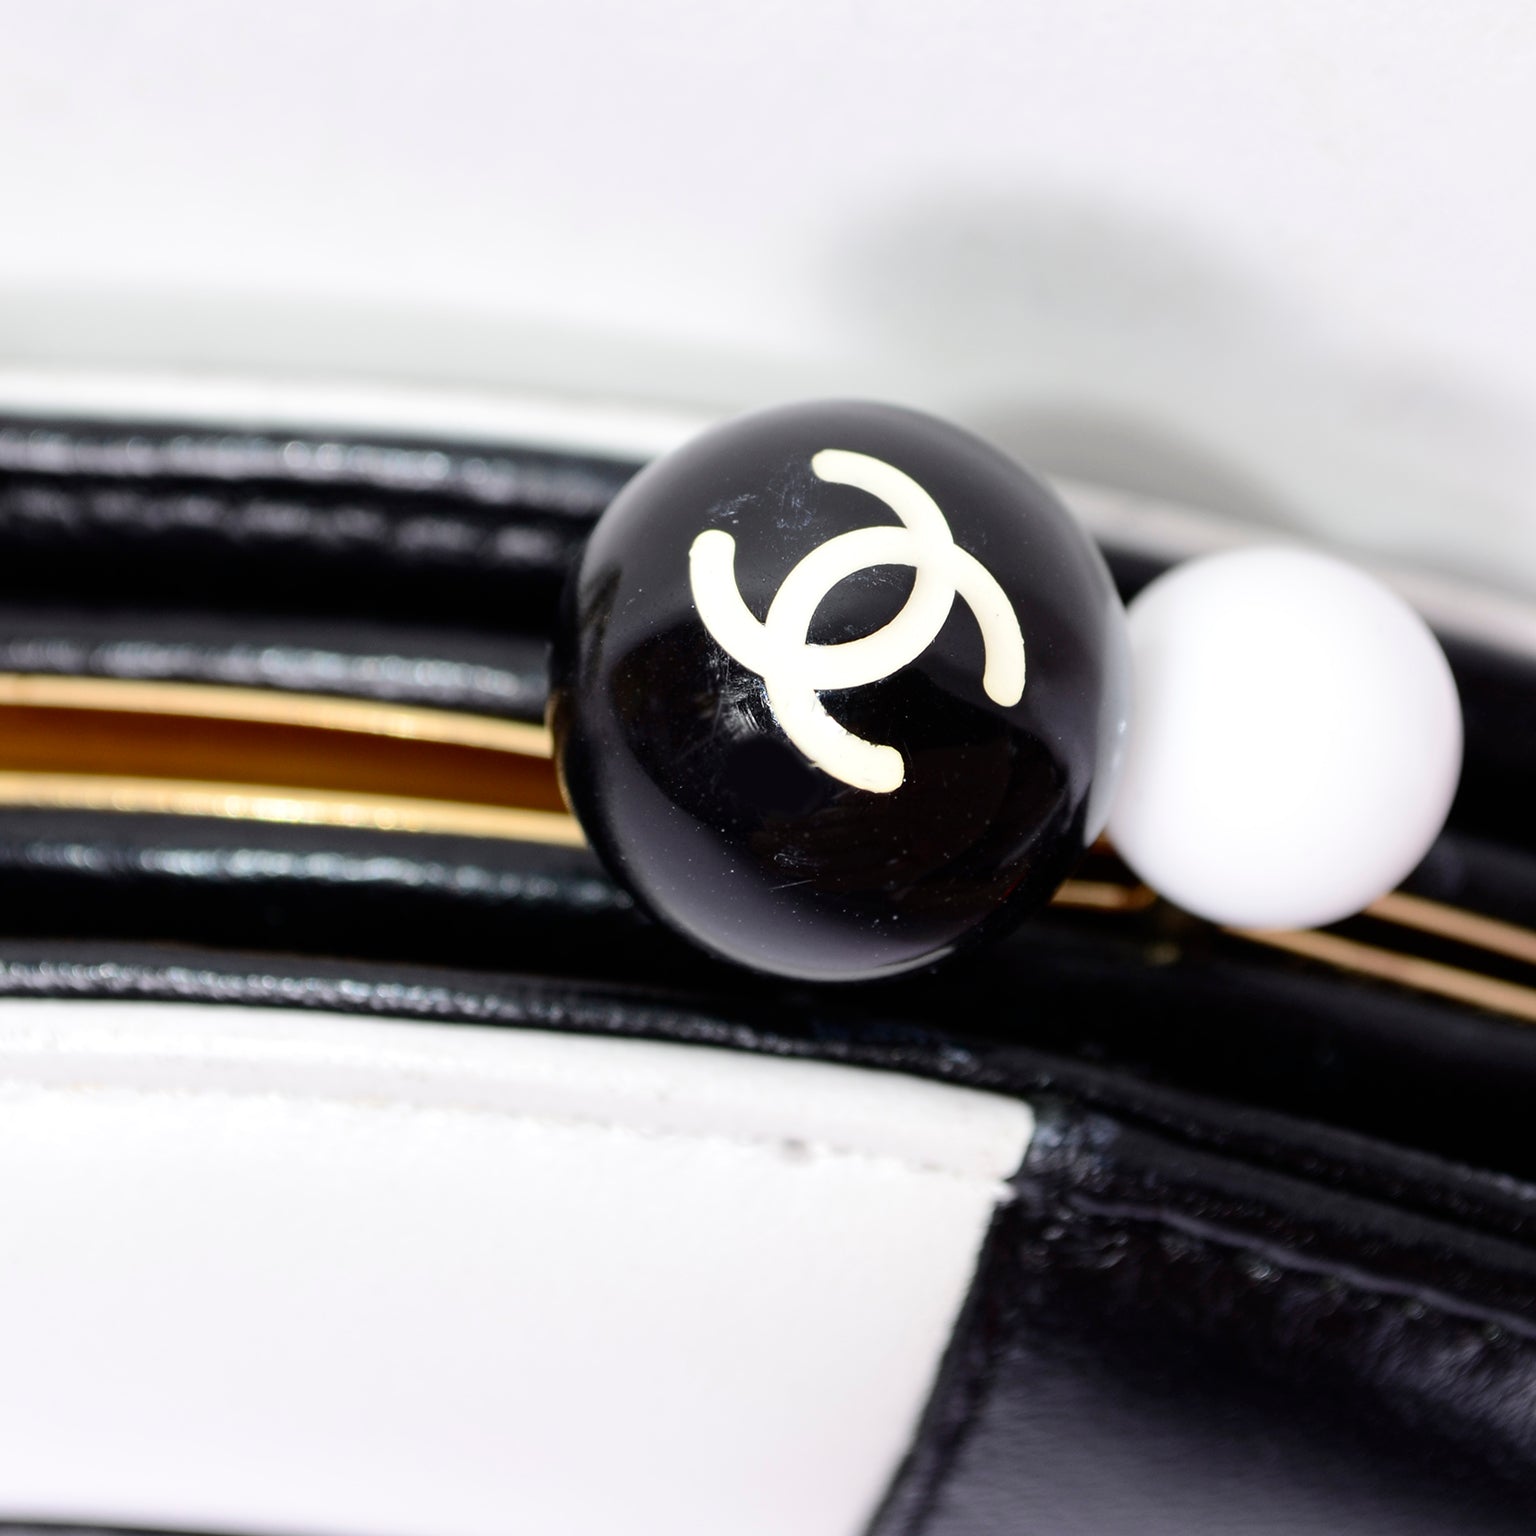 Chanel Black & White Circle Shoulder Bag or Round Clutch C. 2003/04